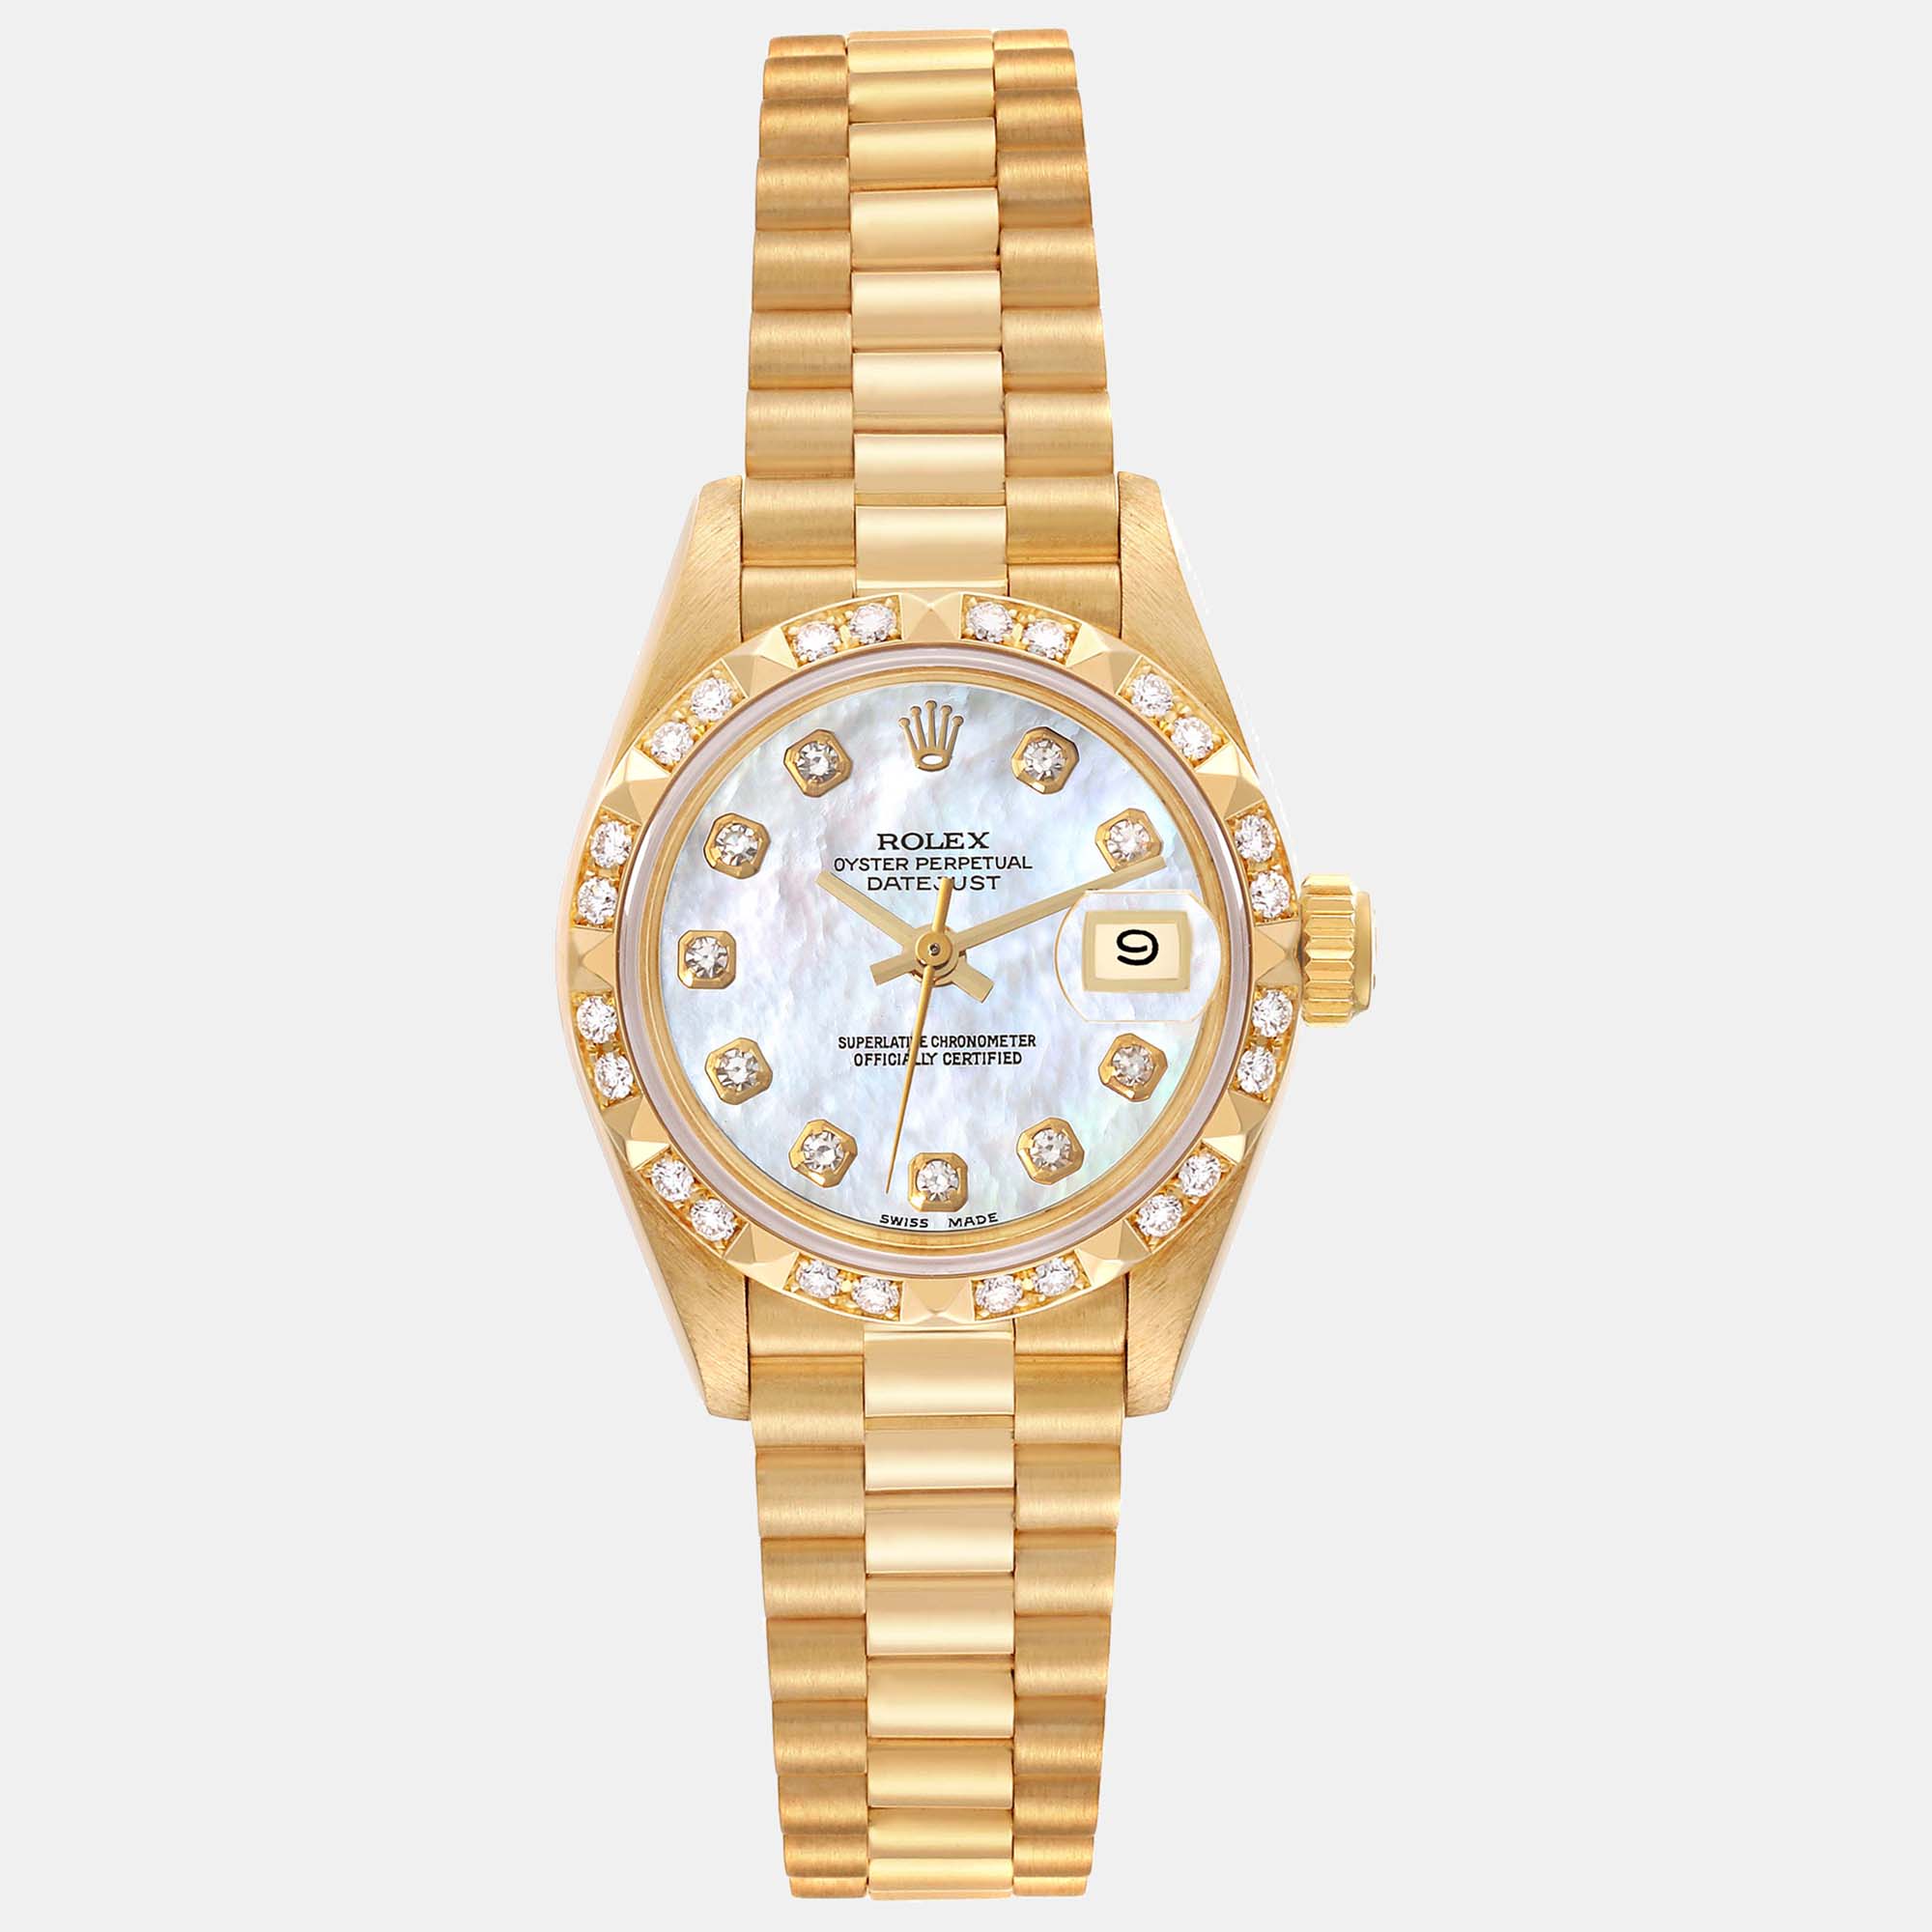 Rolex president datejust yellow gold pyramid diamond bezel watch 26.0 mm